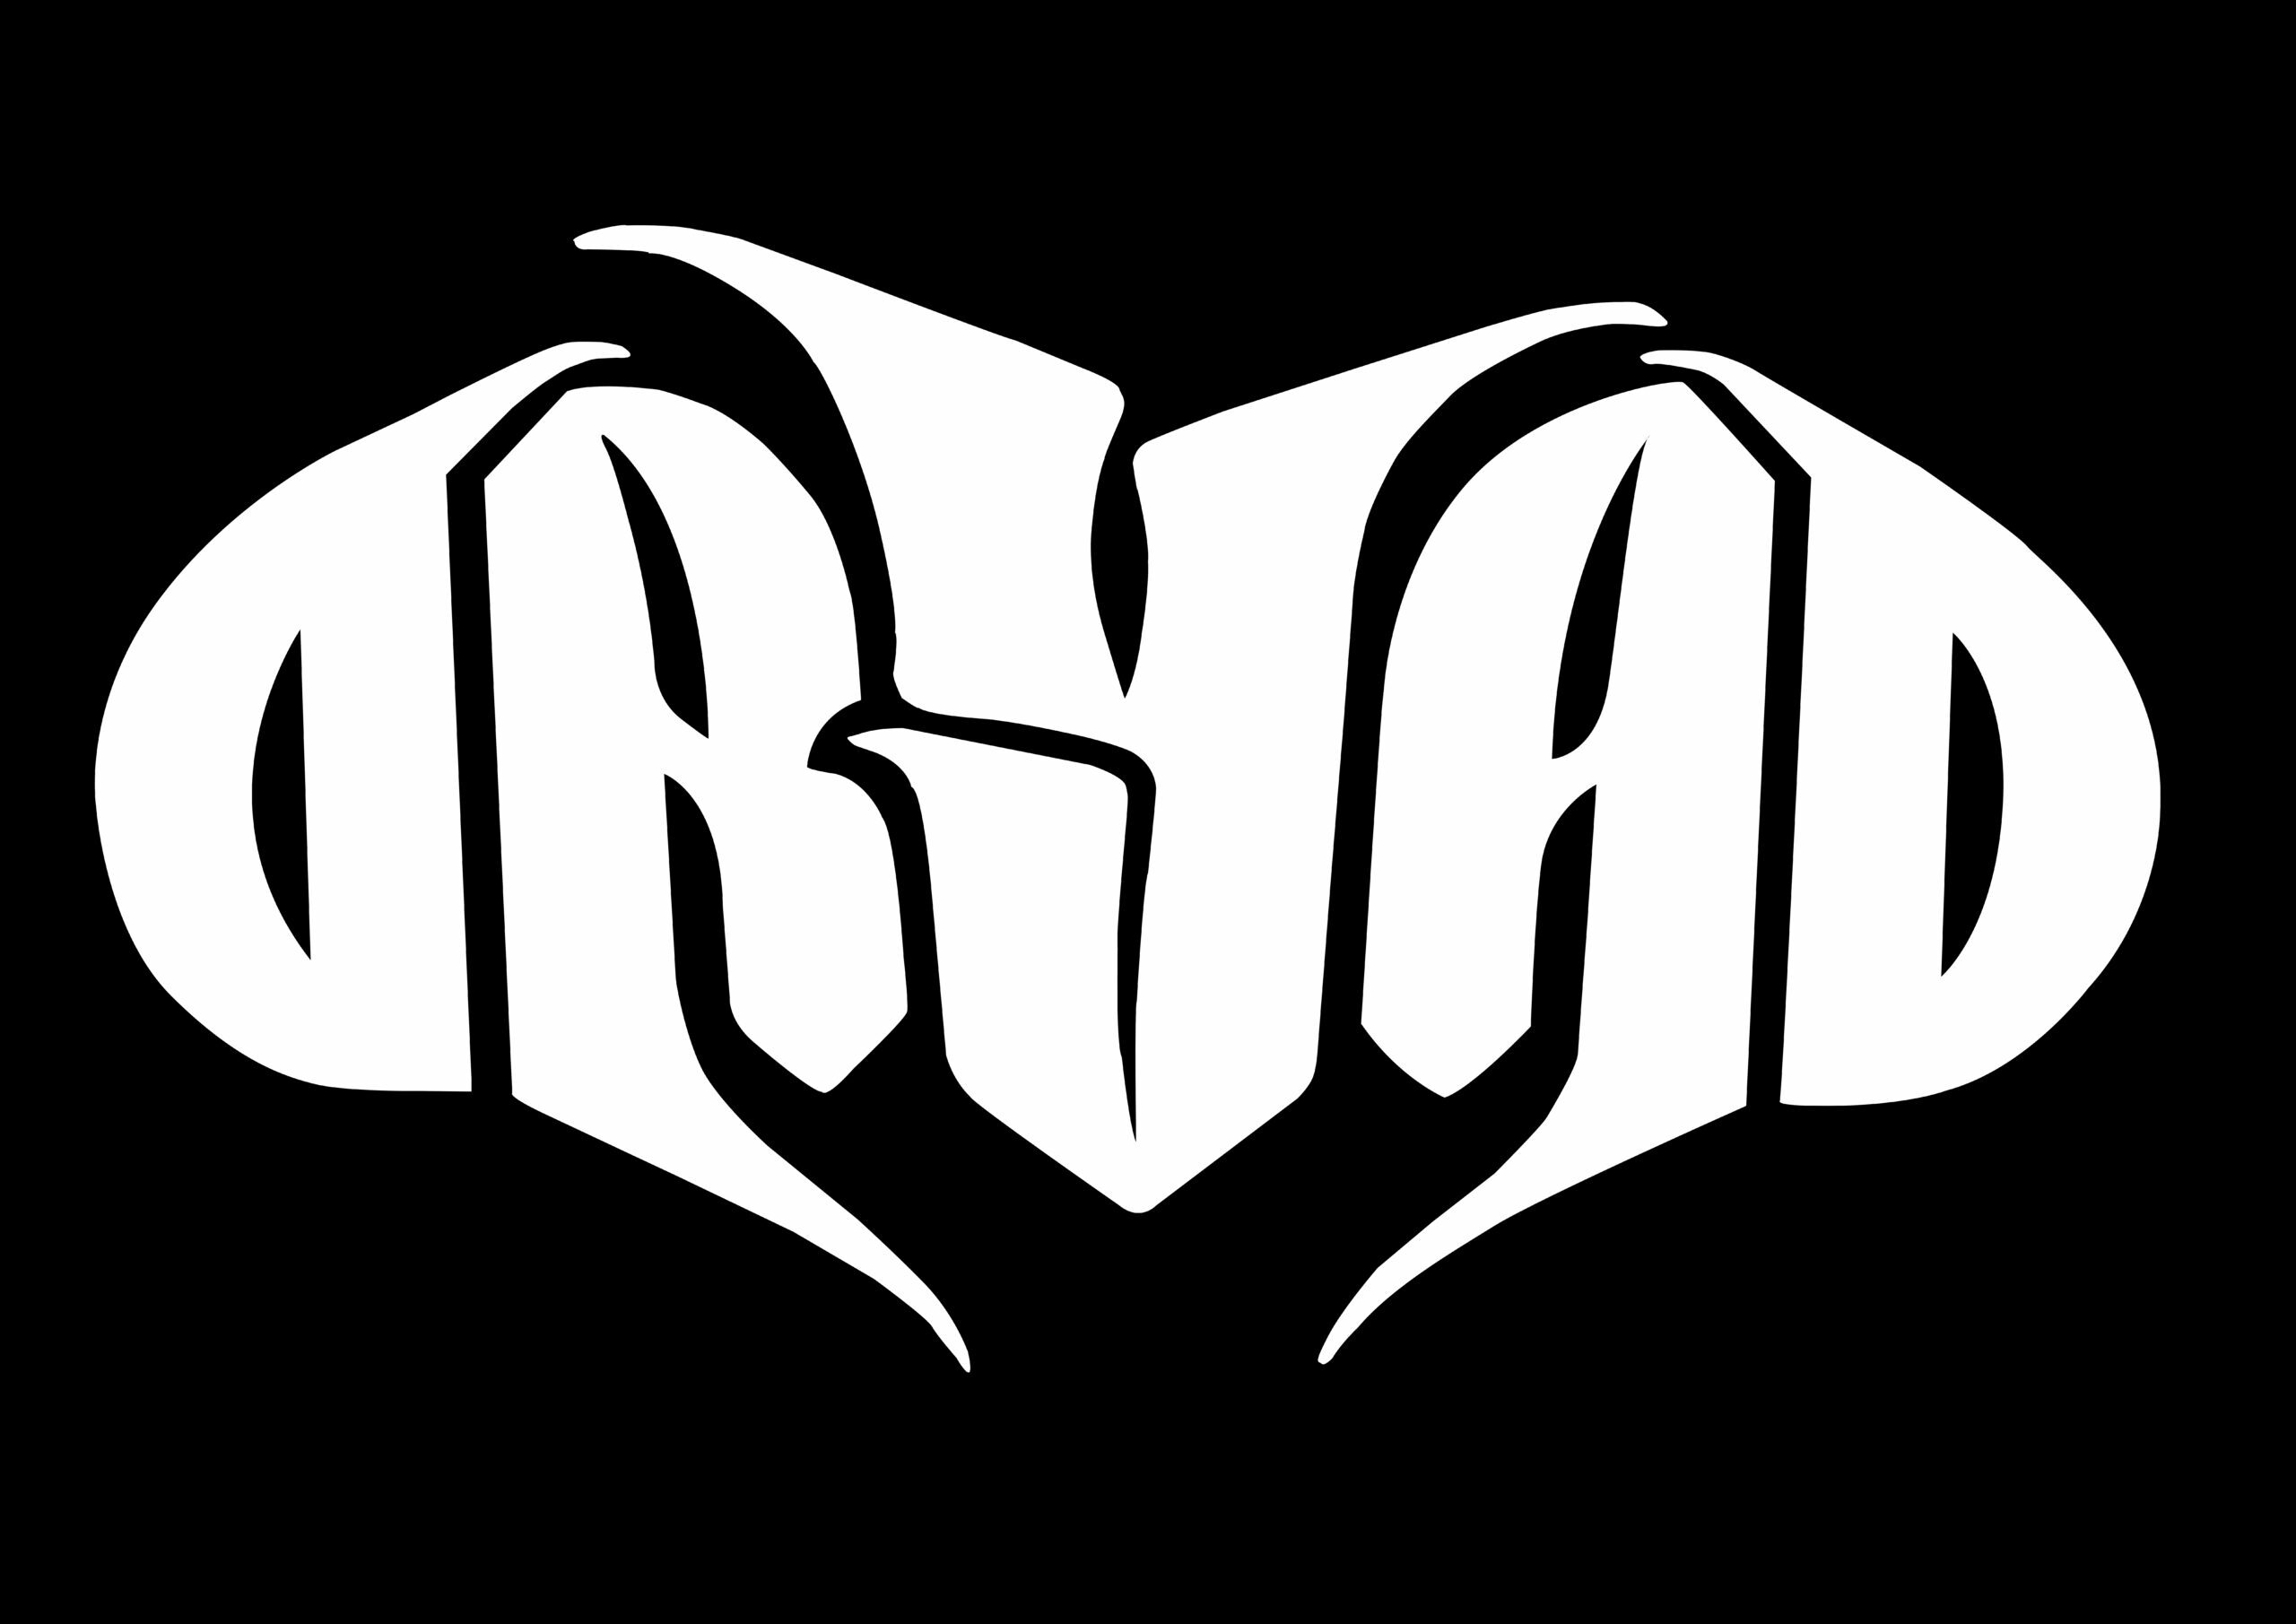 DRYAD Official Website